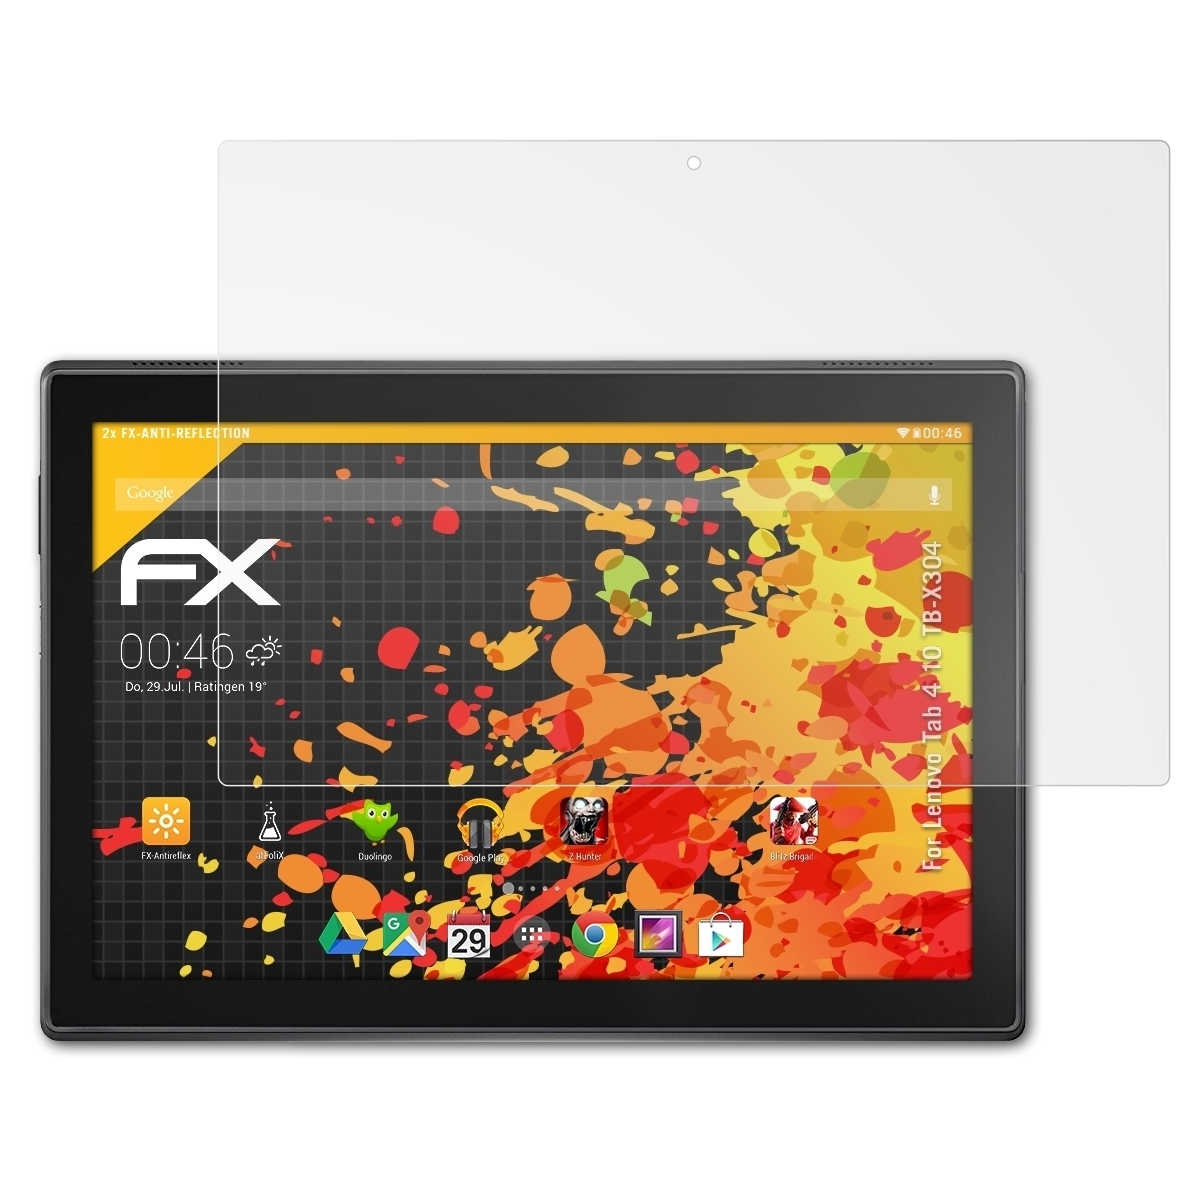 ATFOLIX 2x FX-Antireflex Tab 10 Lenovo Displayschutz(für 4 (TB-X304))